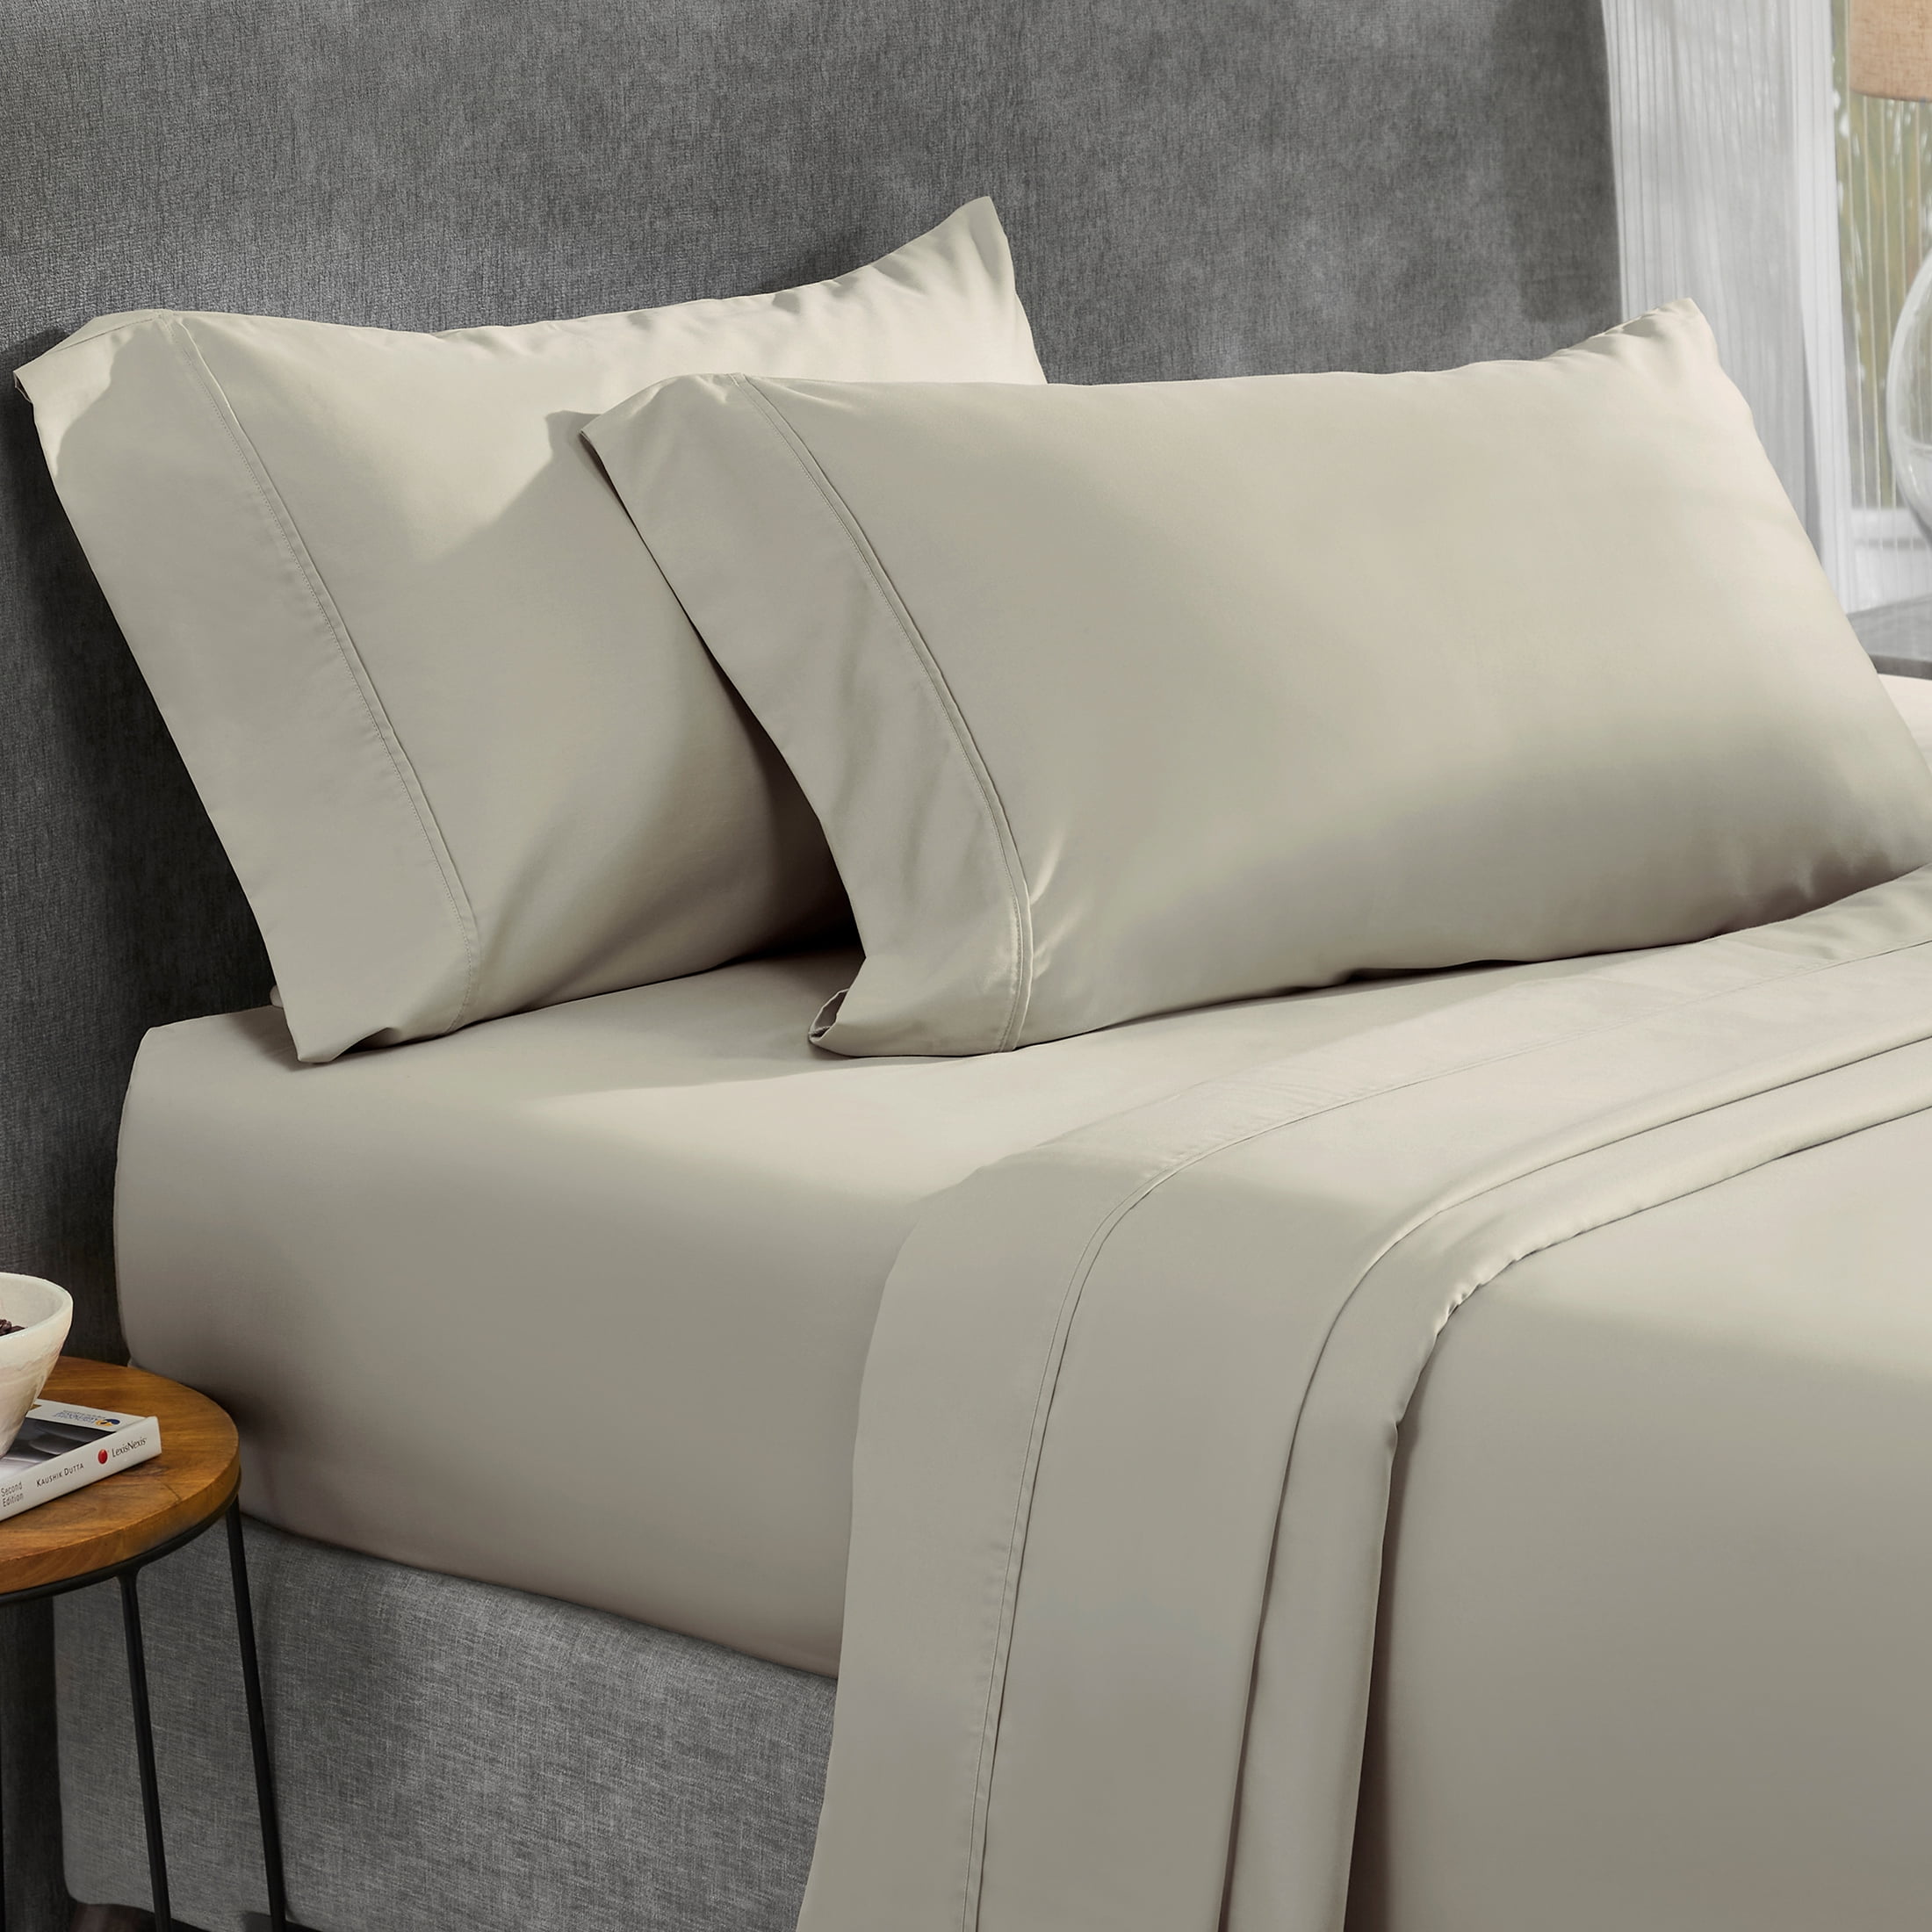 Details about   Luxury Women Tencel Bedding Set Silk Quilt Cover Flat Fitted Sheet Pillowcase 